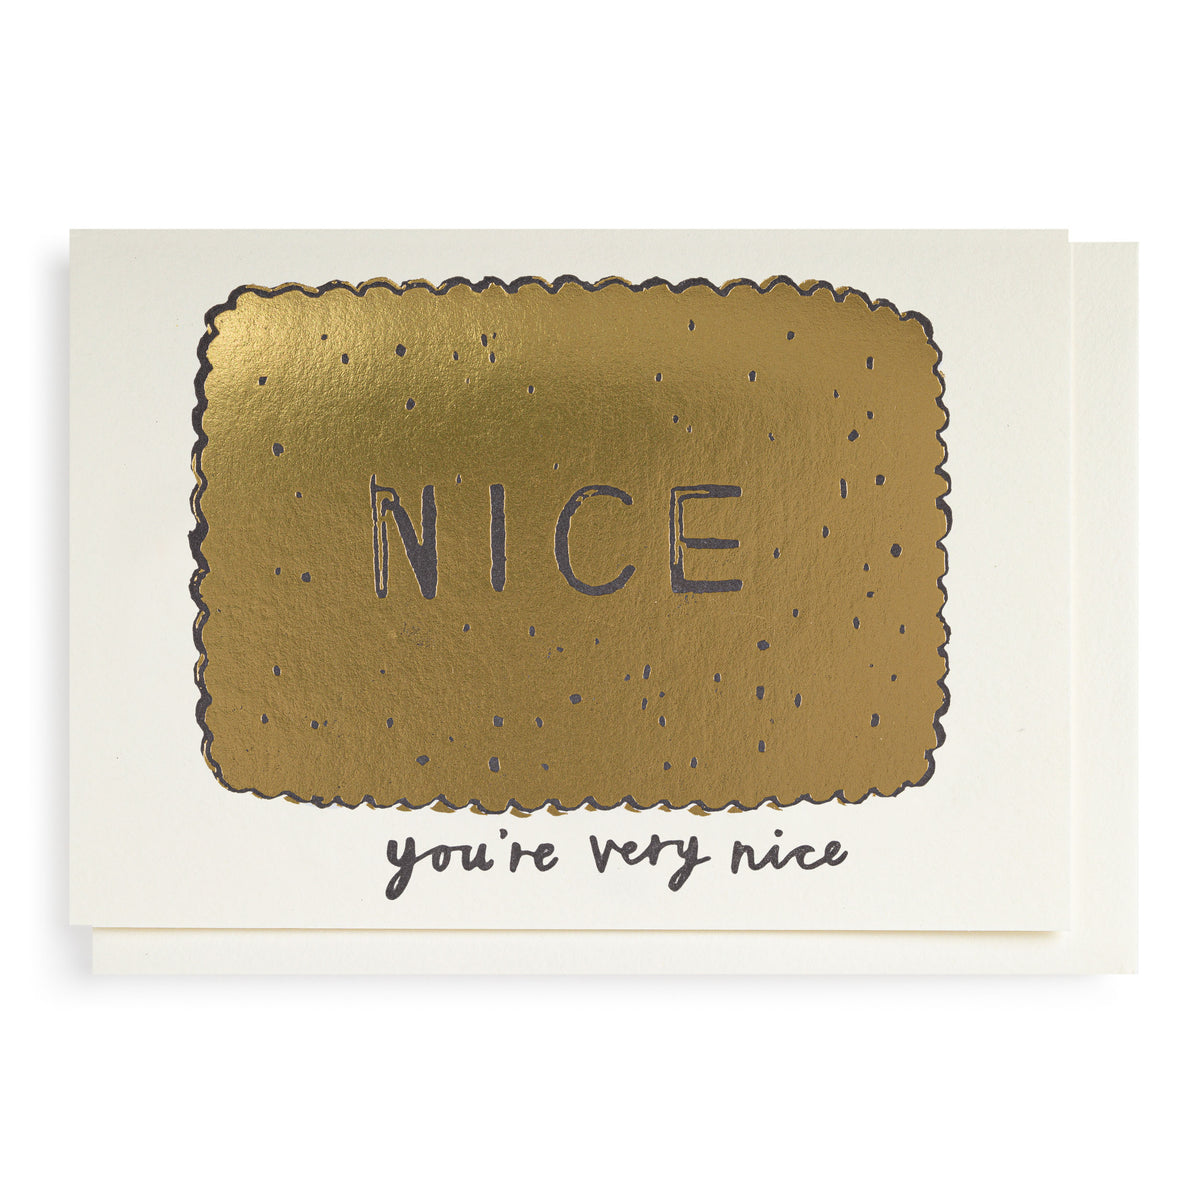 You're Nice - letterpress printed greeting card